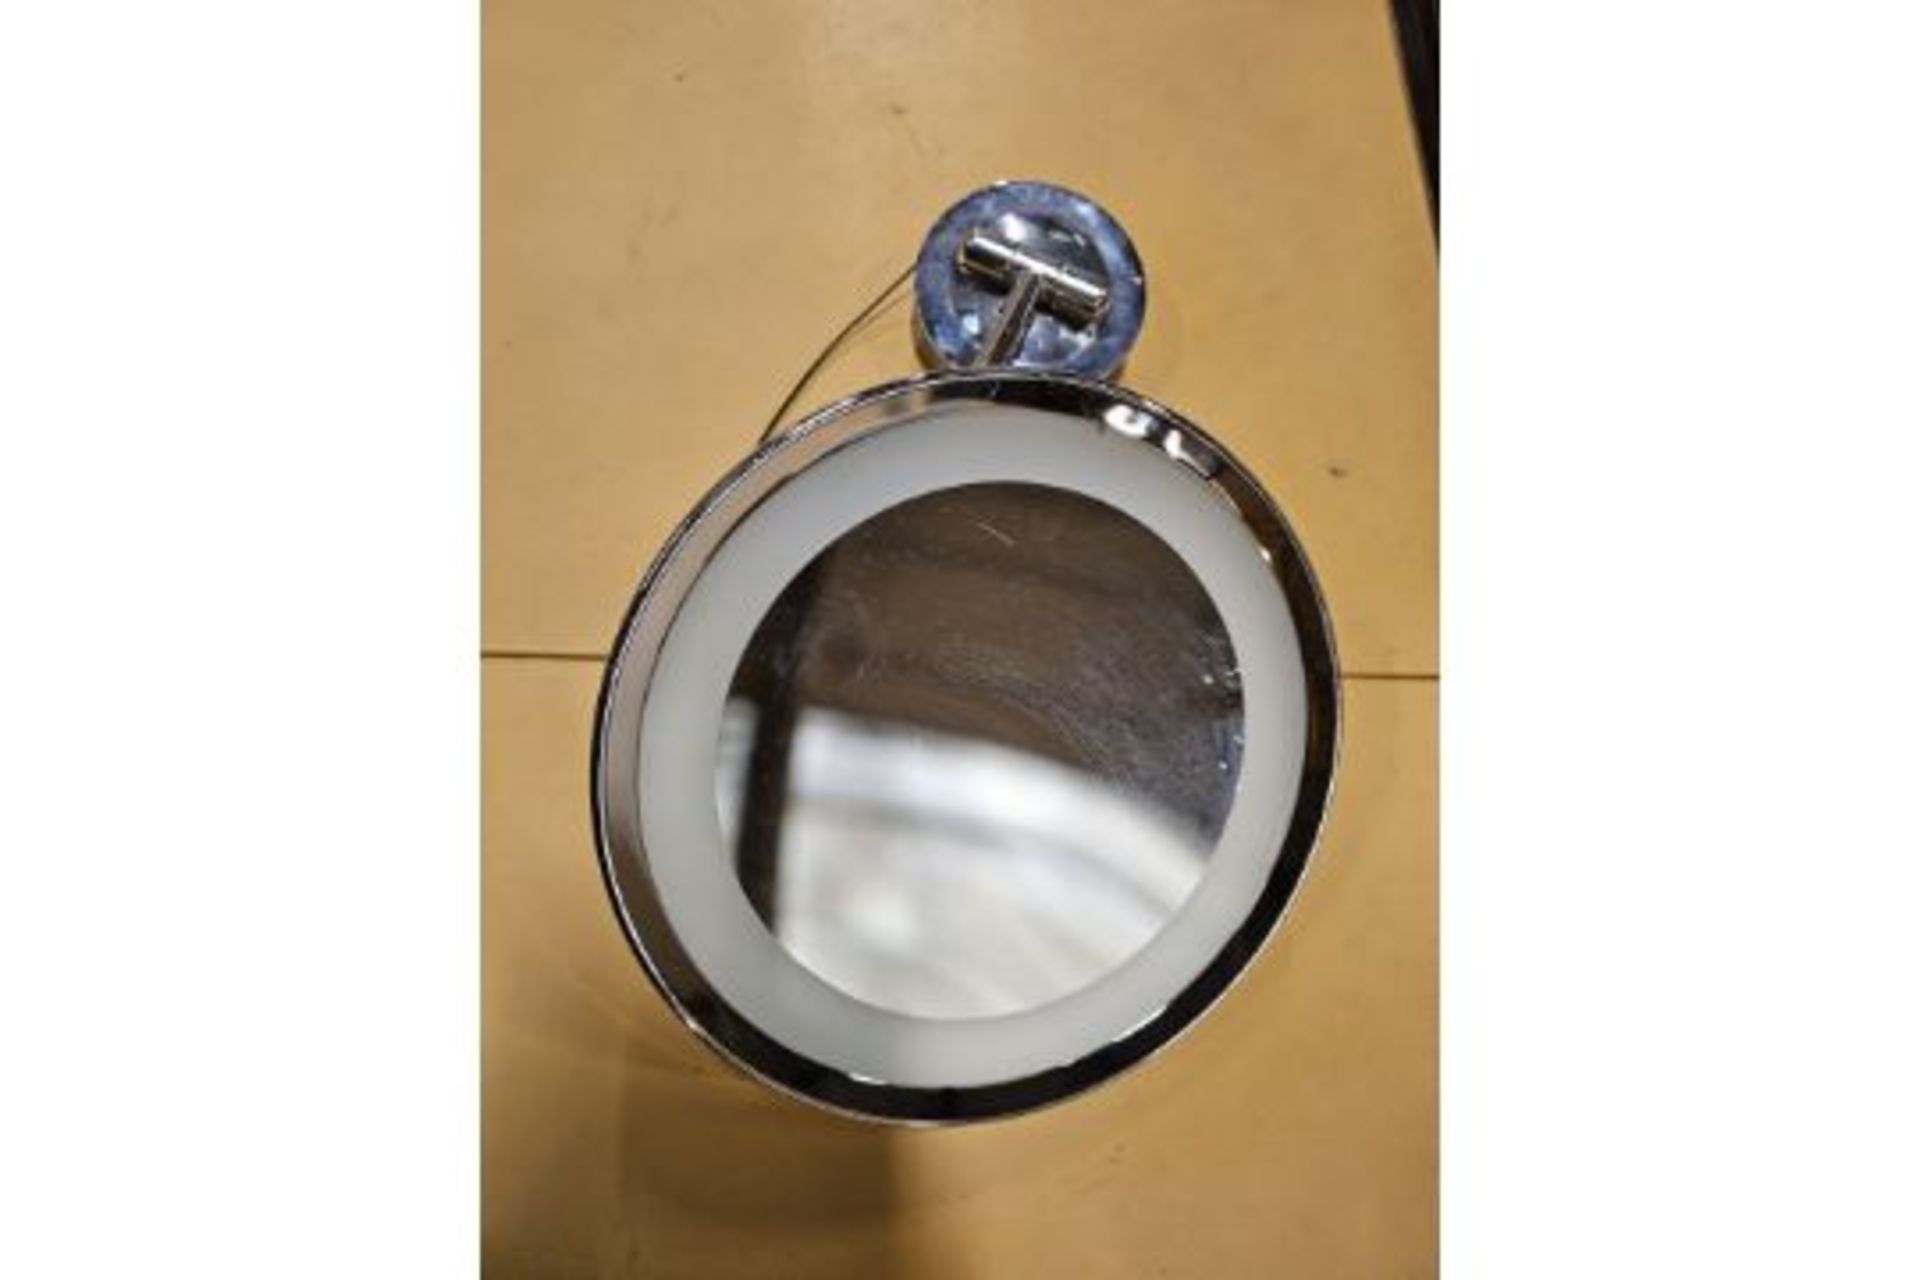 LED Illuminated Magnifying Vanity Mirror For Bathroom Round Ingress Protection Rating IP44 - Image 2 of 2